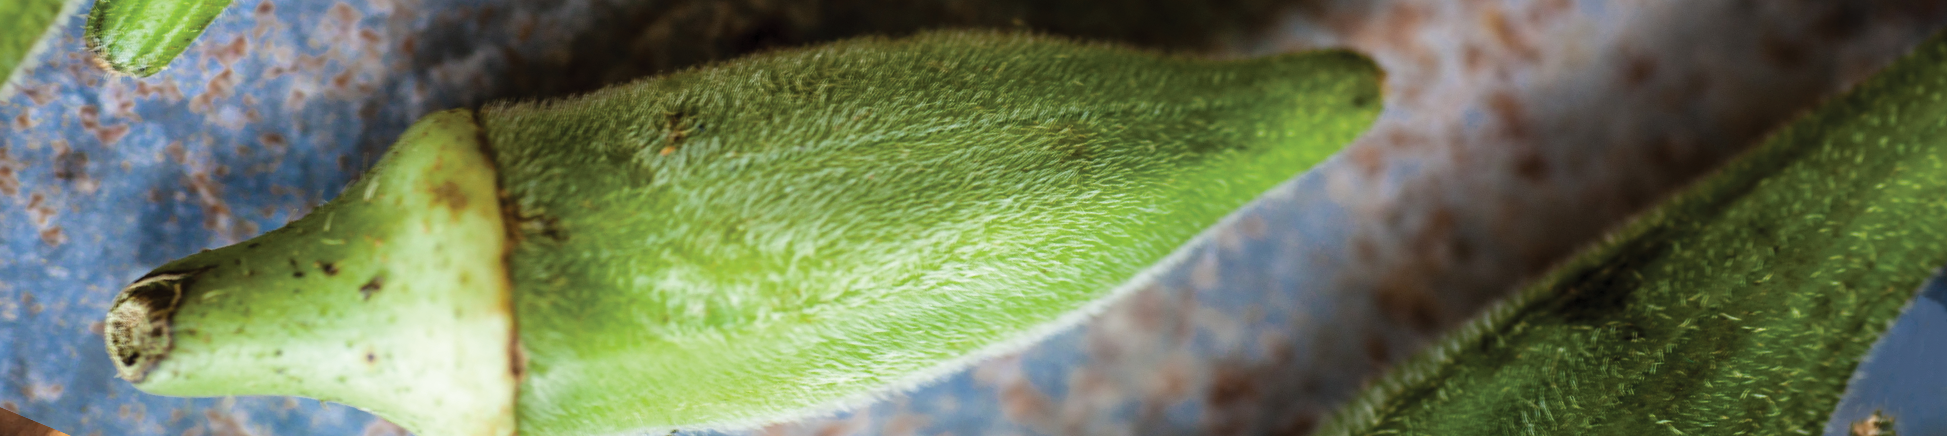 High-resolution photo of Okra